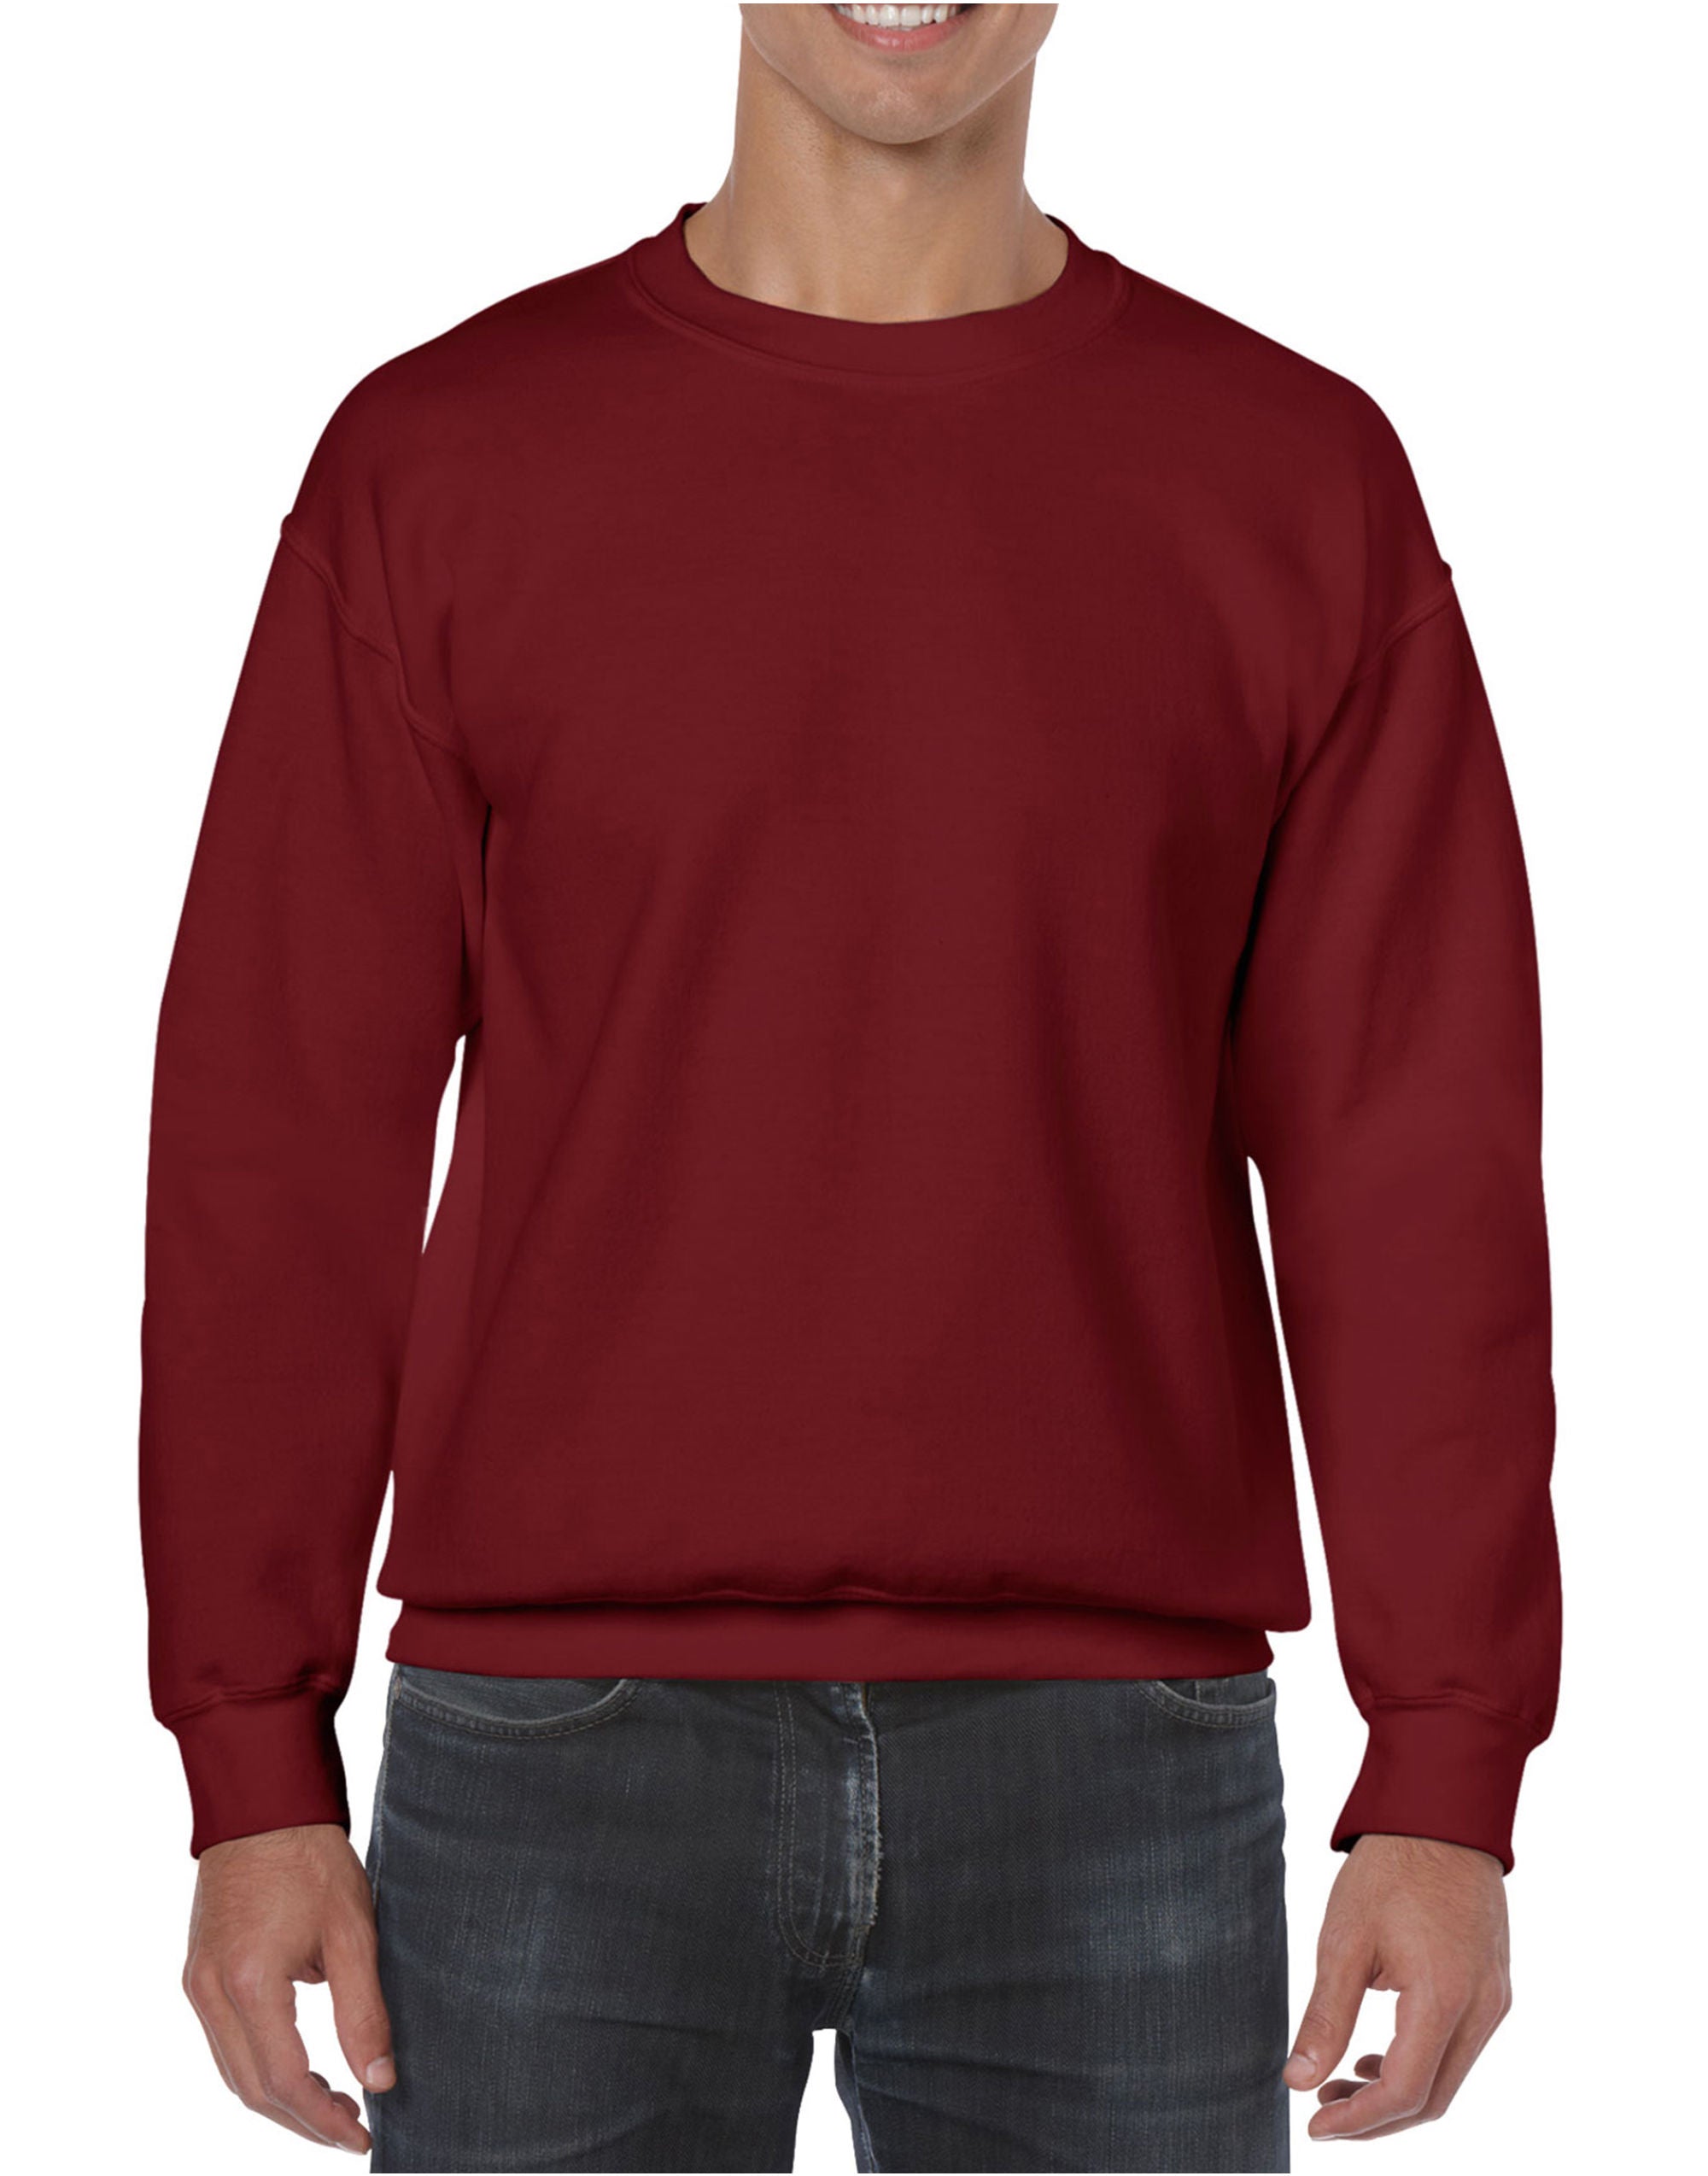 5 x Sweatshirts with Embroidered LOGO